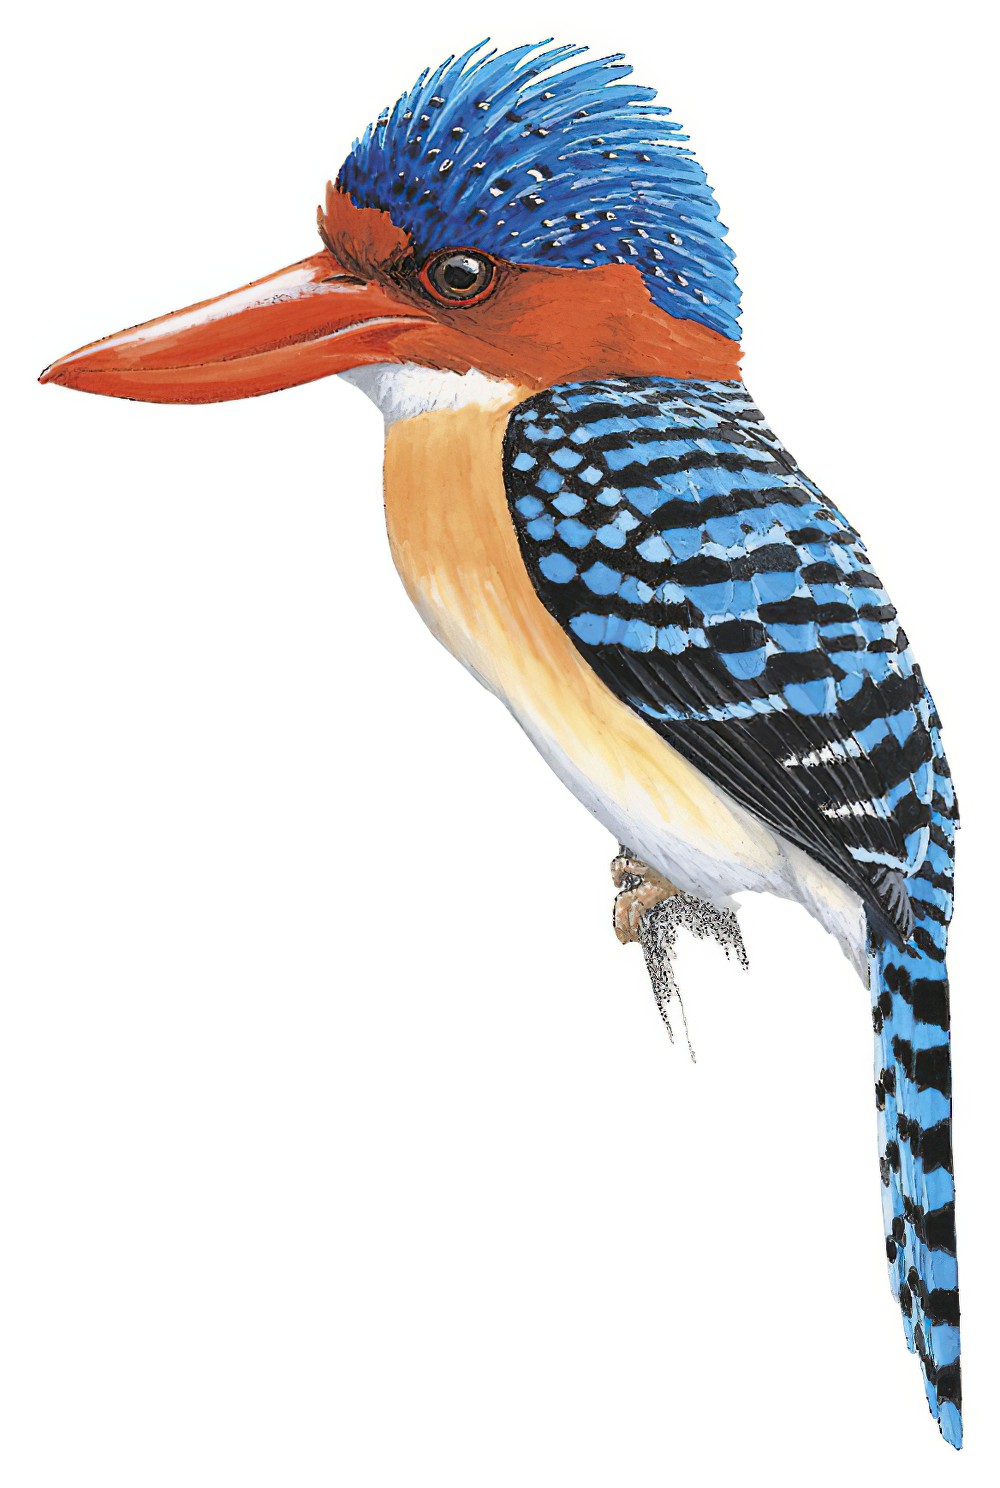 Banded Kingfisher / Lacedo pulchella